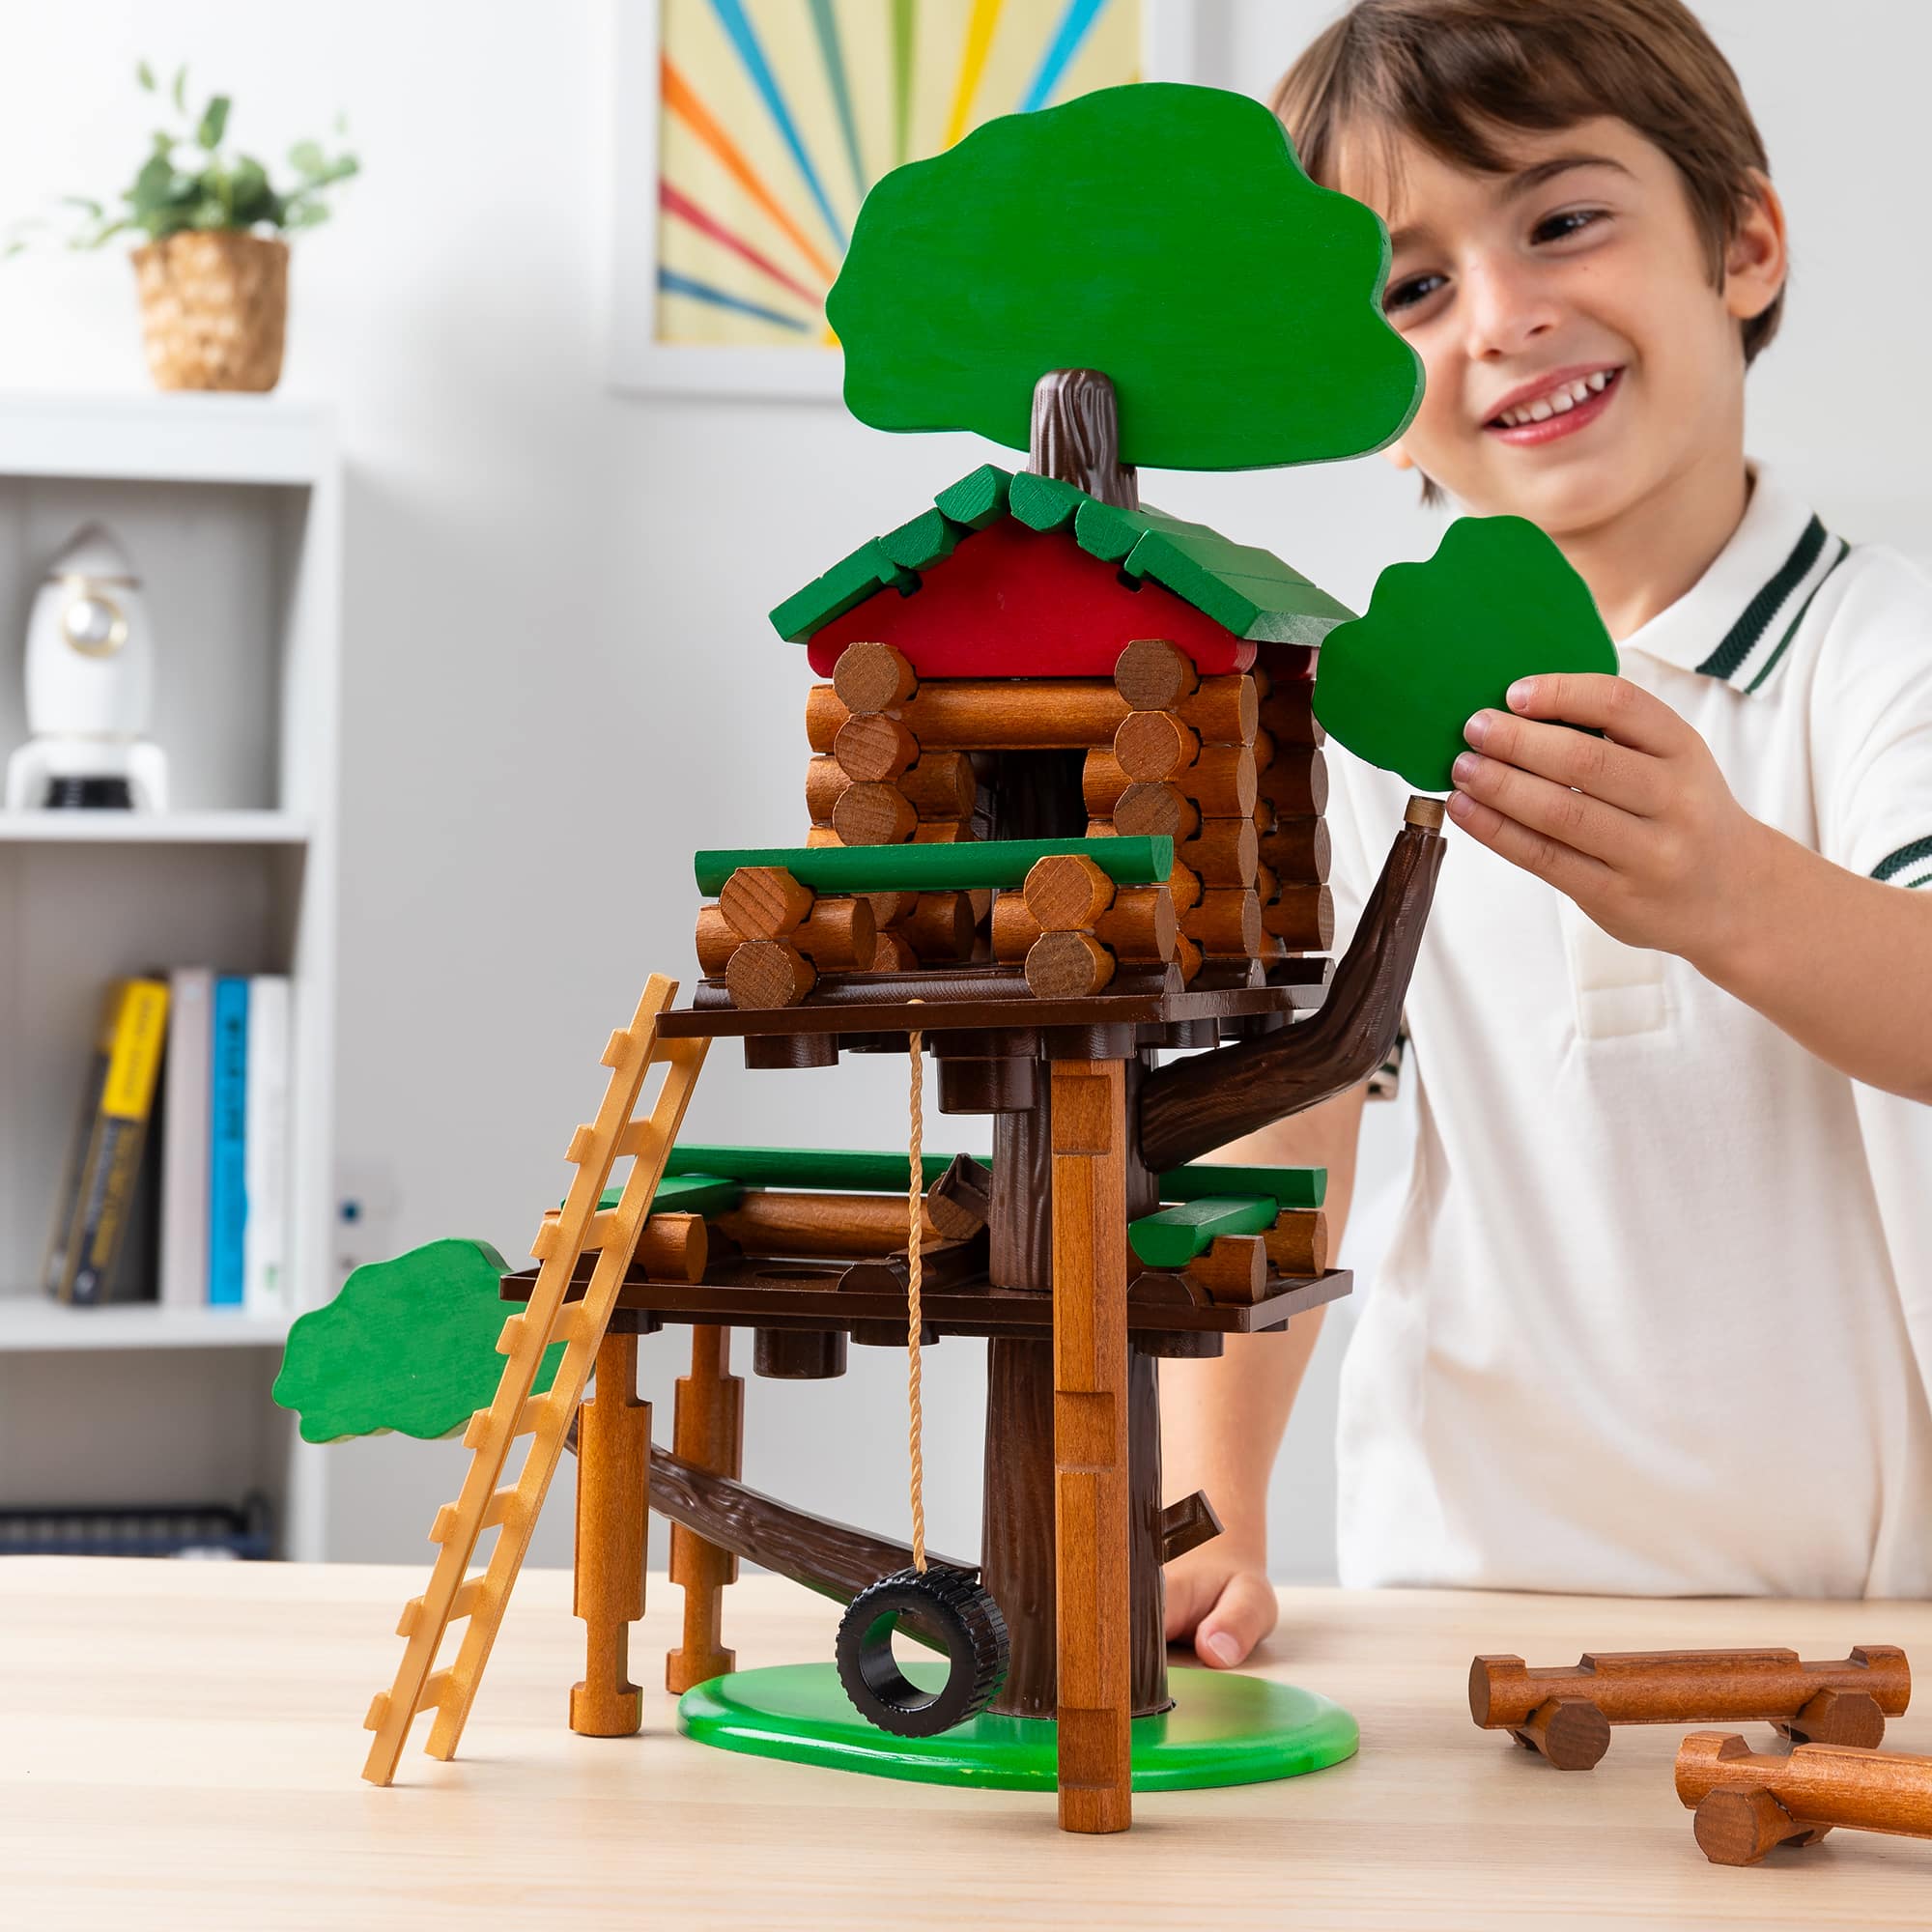 Ants! – Treehouse Toys